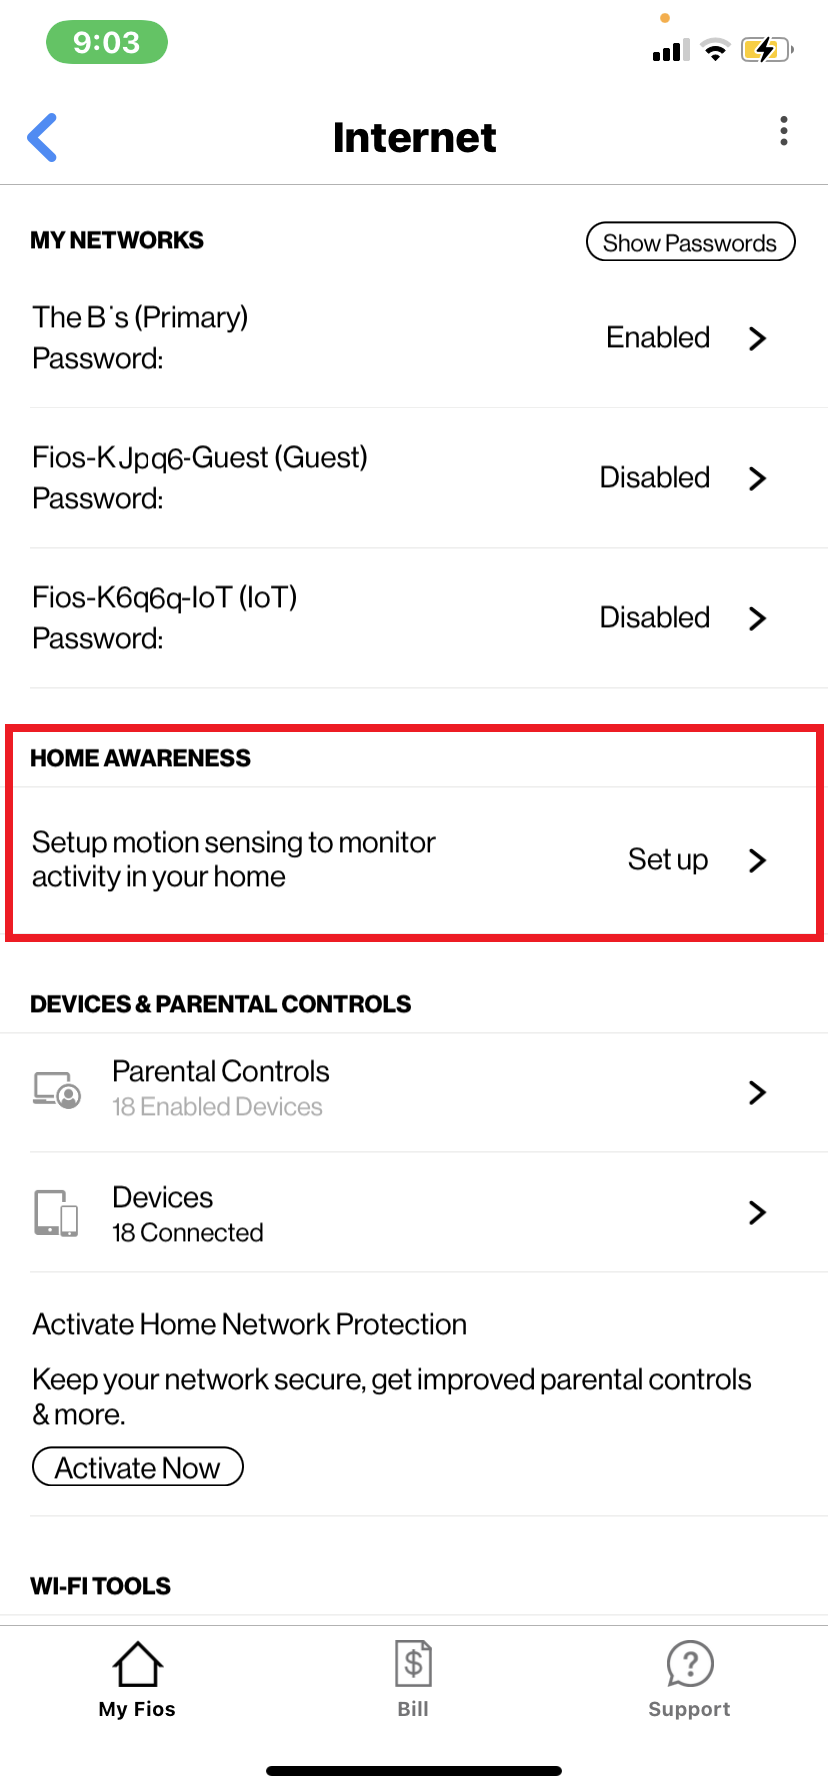 Pantalla My Fios app resaltando "Home Awareness".